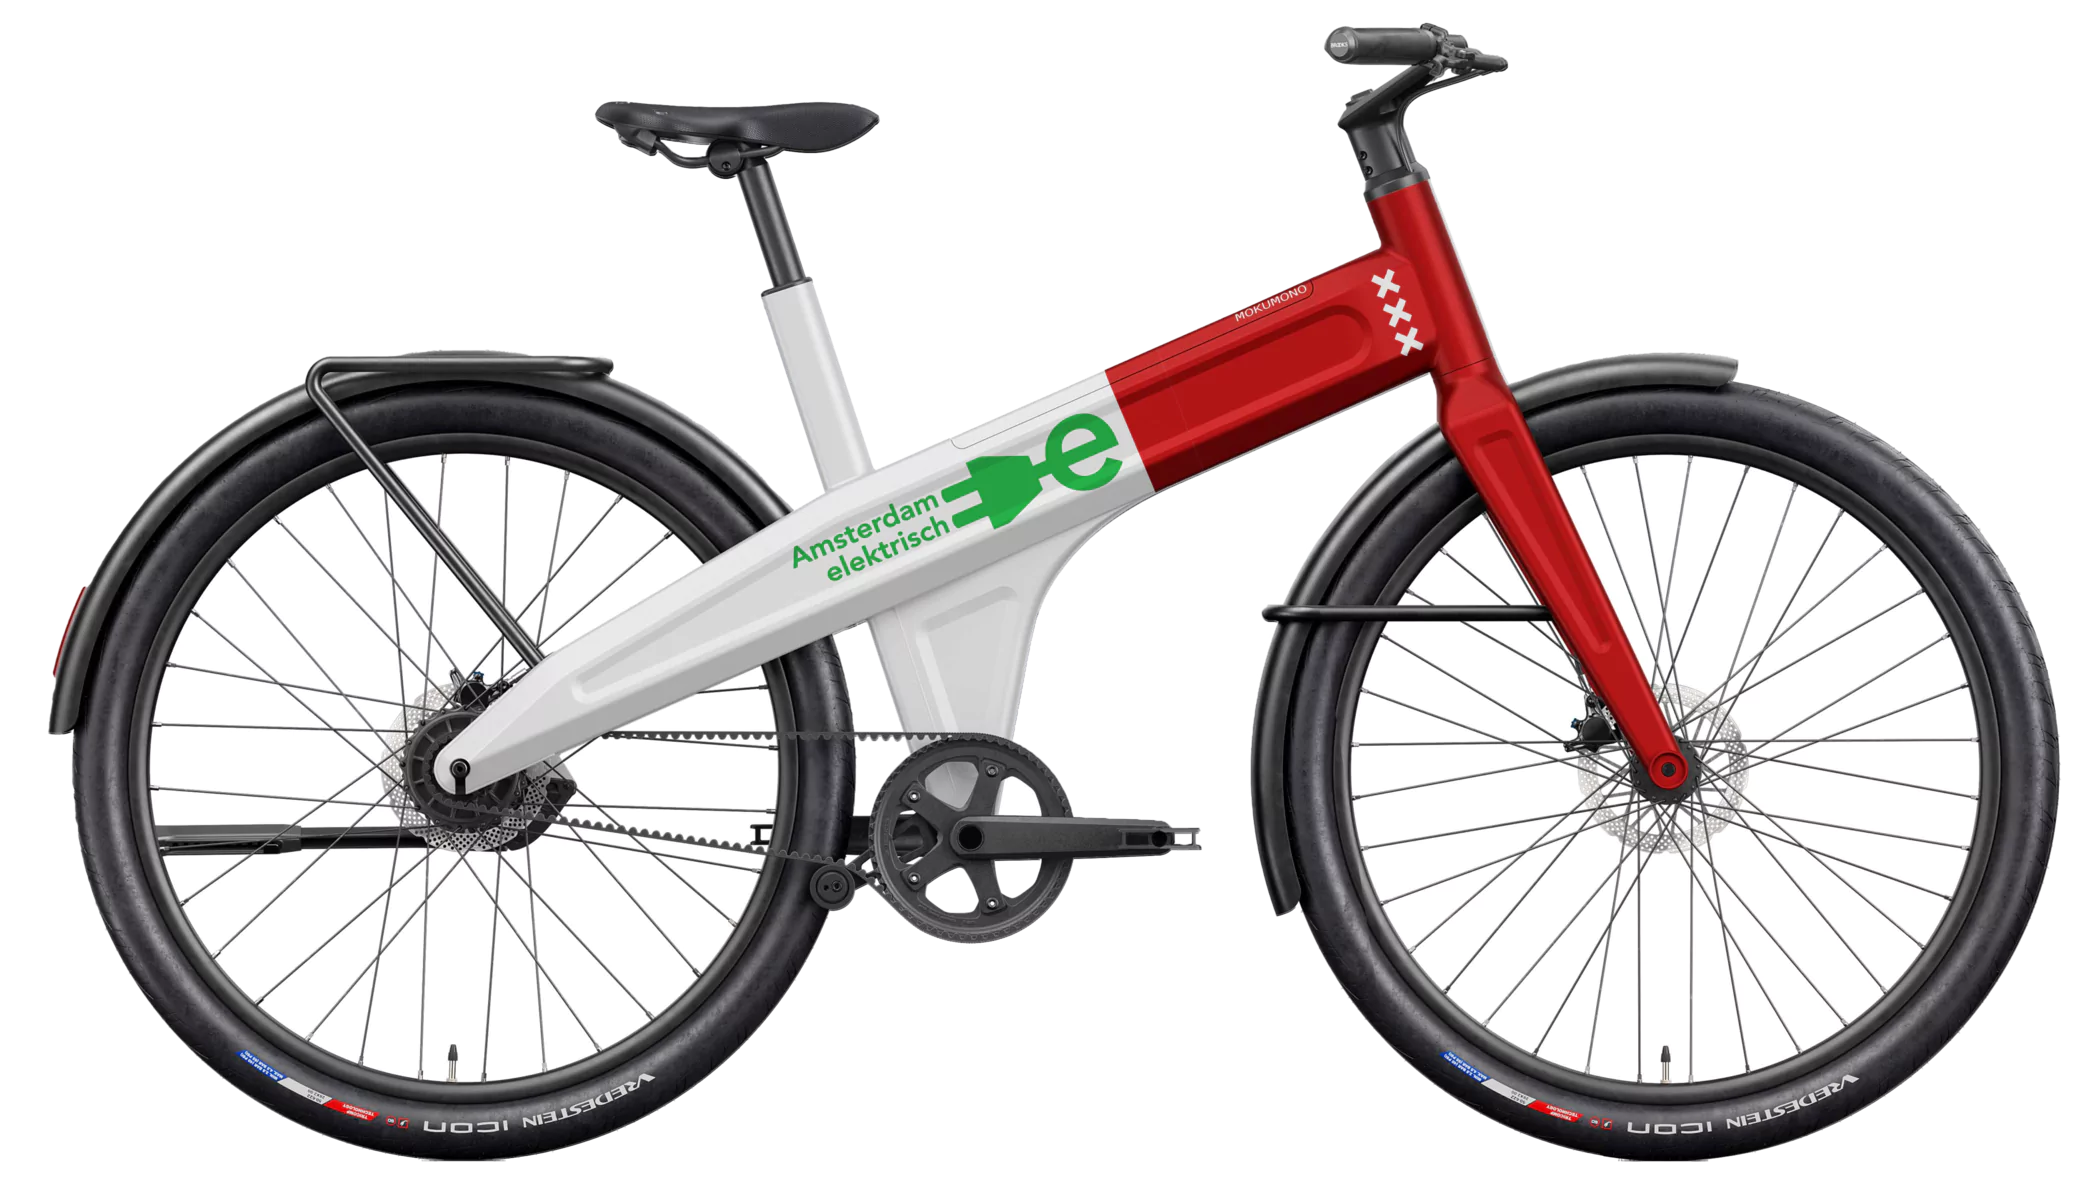 Mokumono Polder company bicycle with your own logo